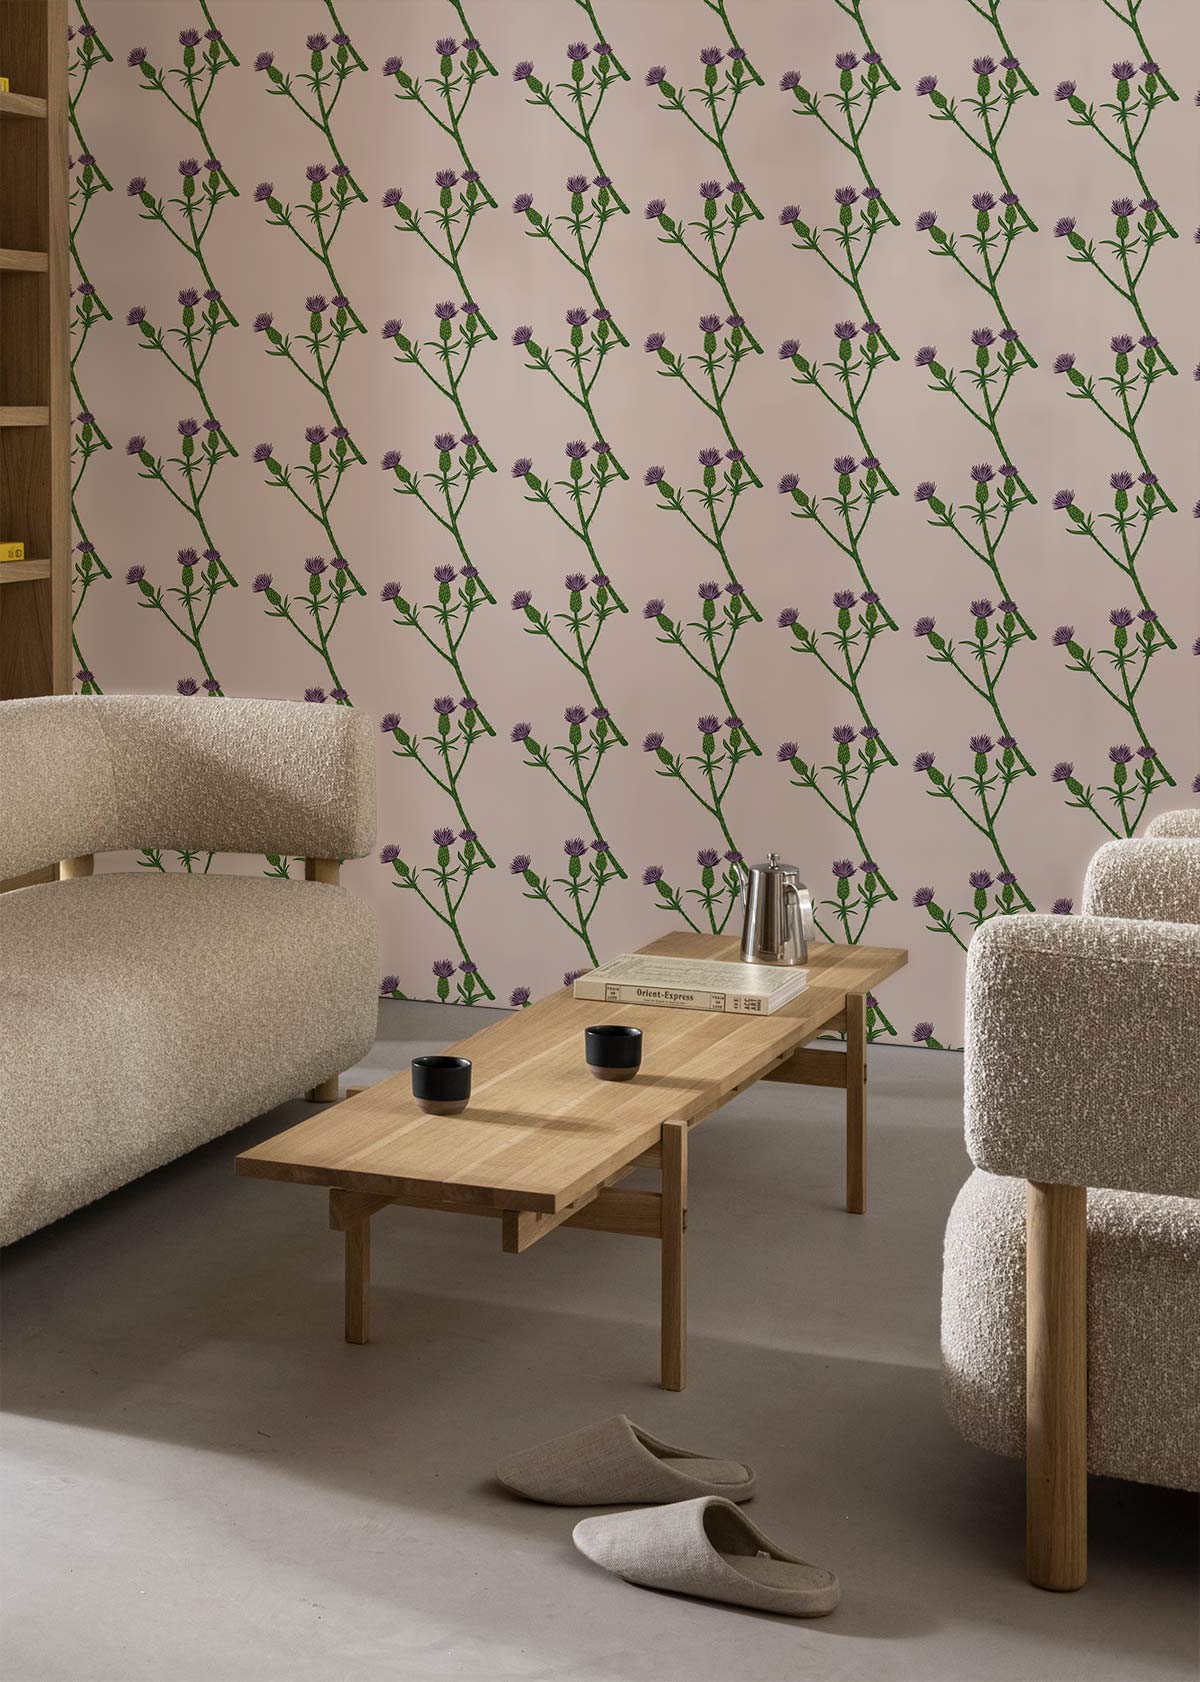 Floral Art Pattern Mural Wallpaper Home Interior Decor